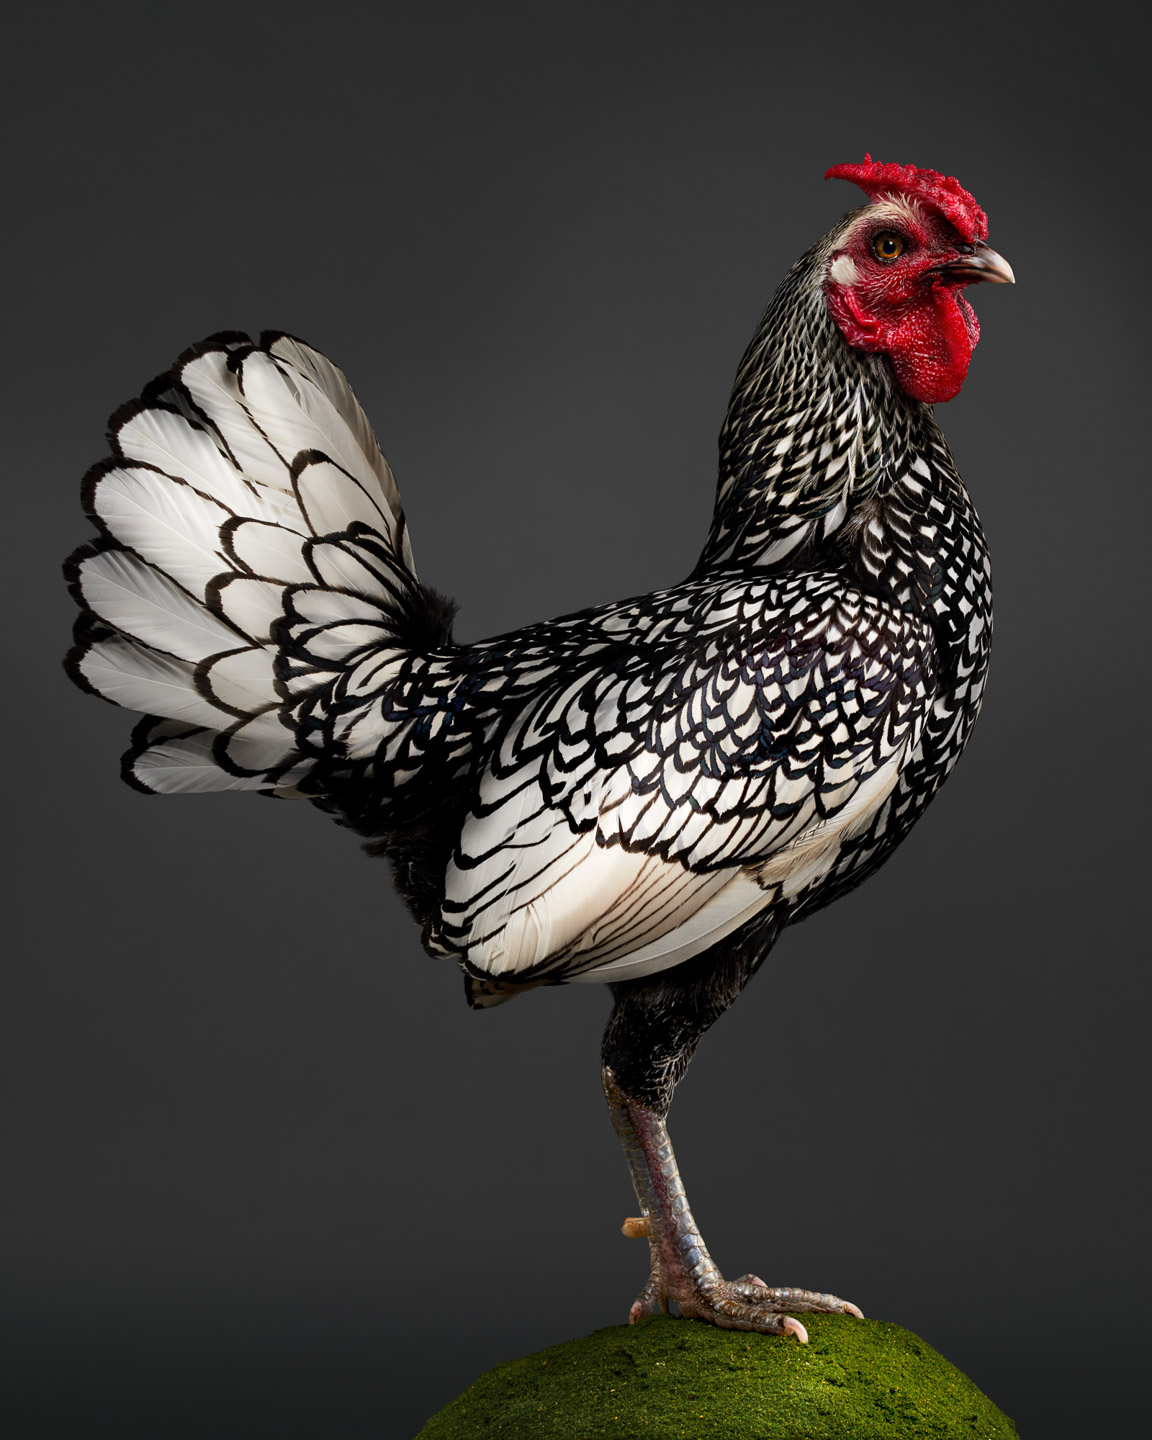 domino the bantam sebright rooster cock.